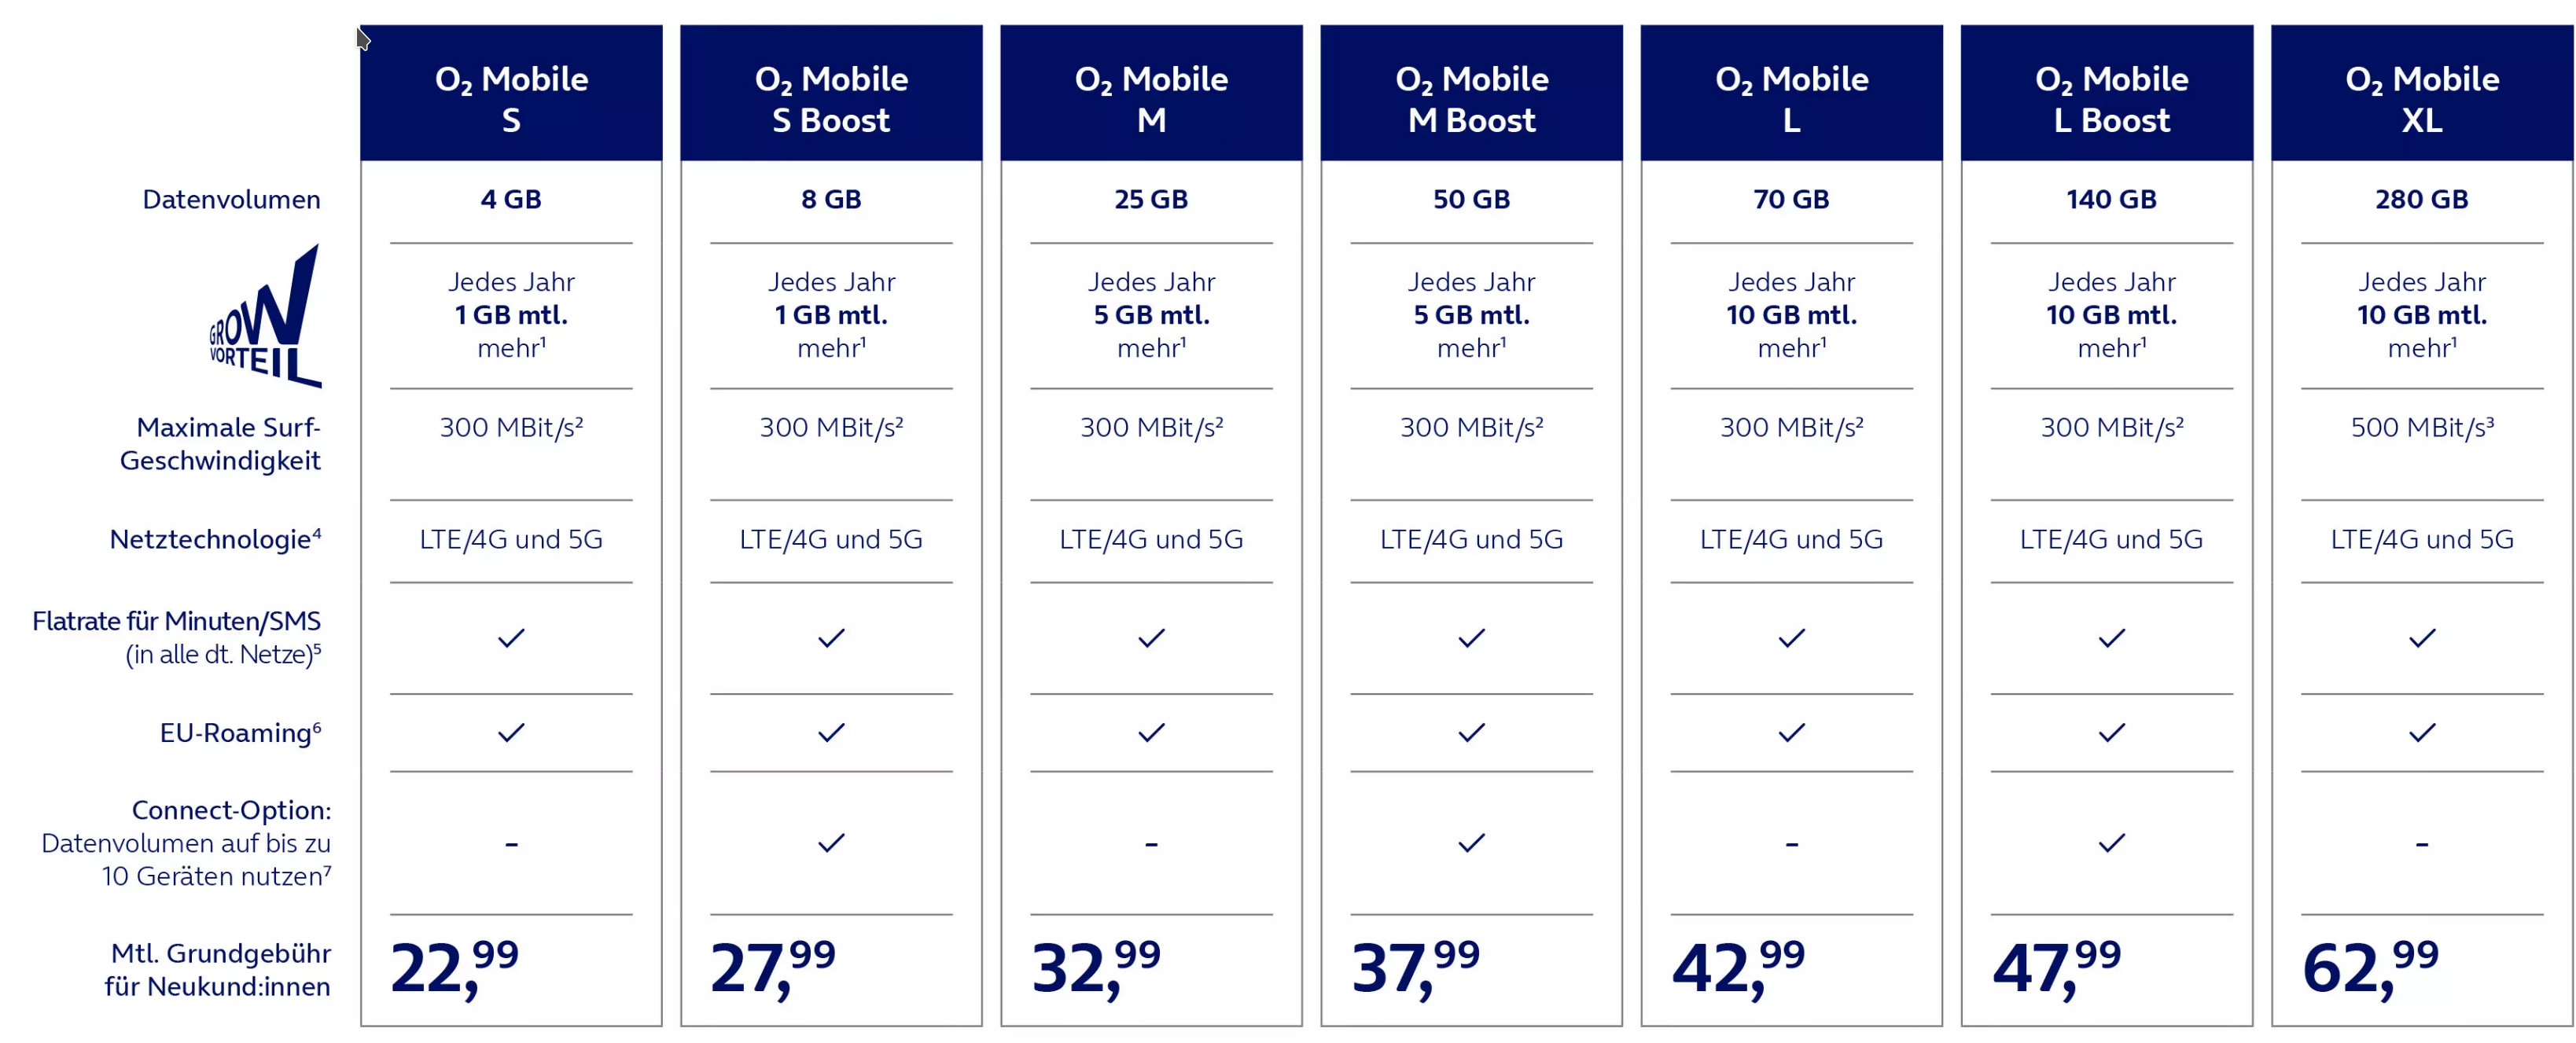 Neue O2 5G Mobilfunktarife: O2 Mobile XL bietet 280 Gigabyte Datenvolumen